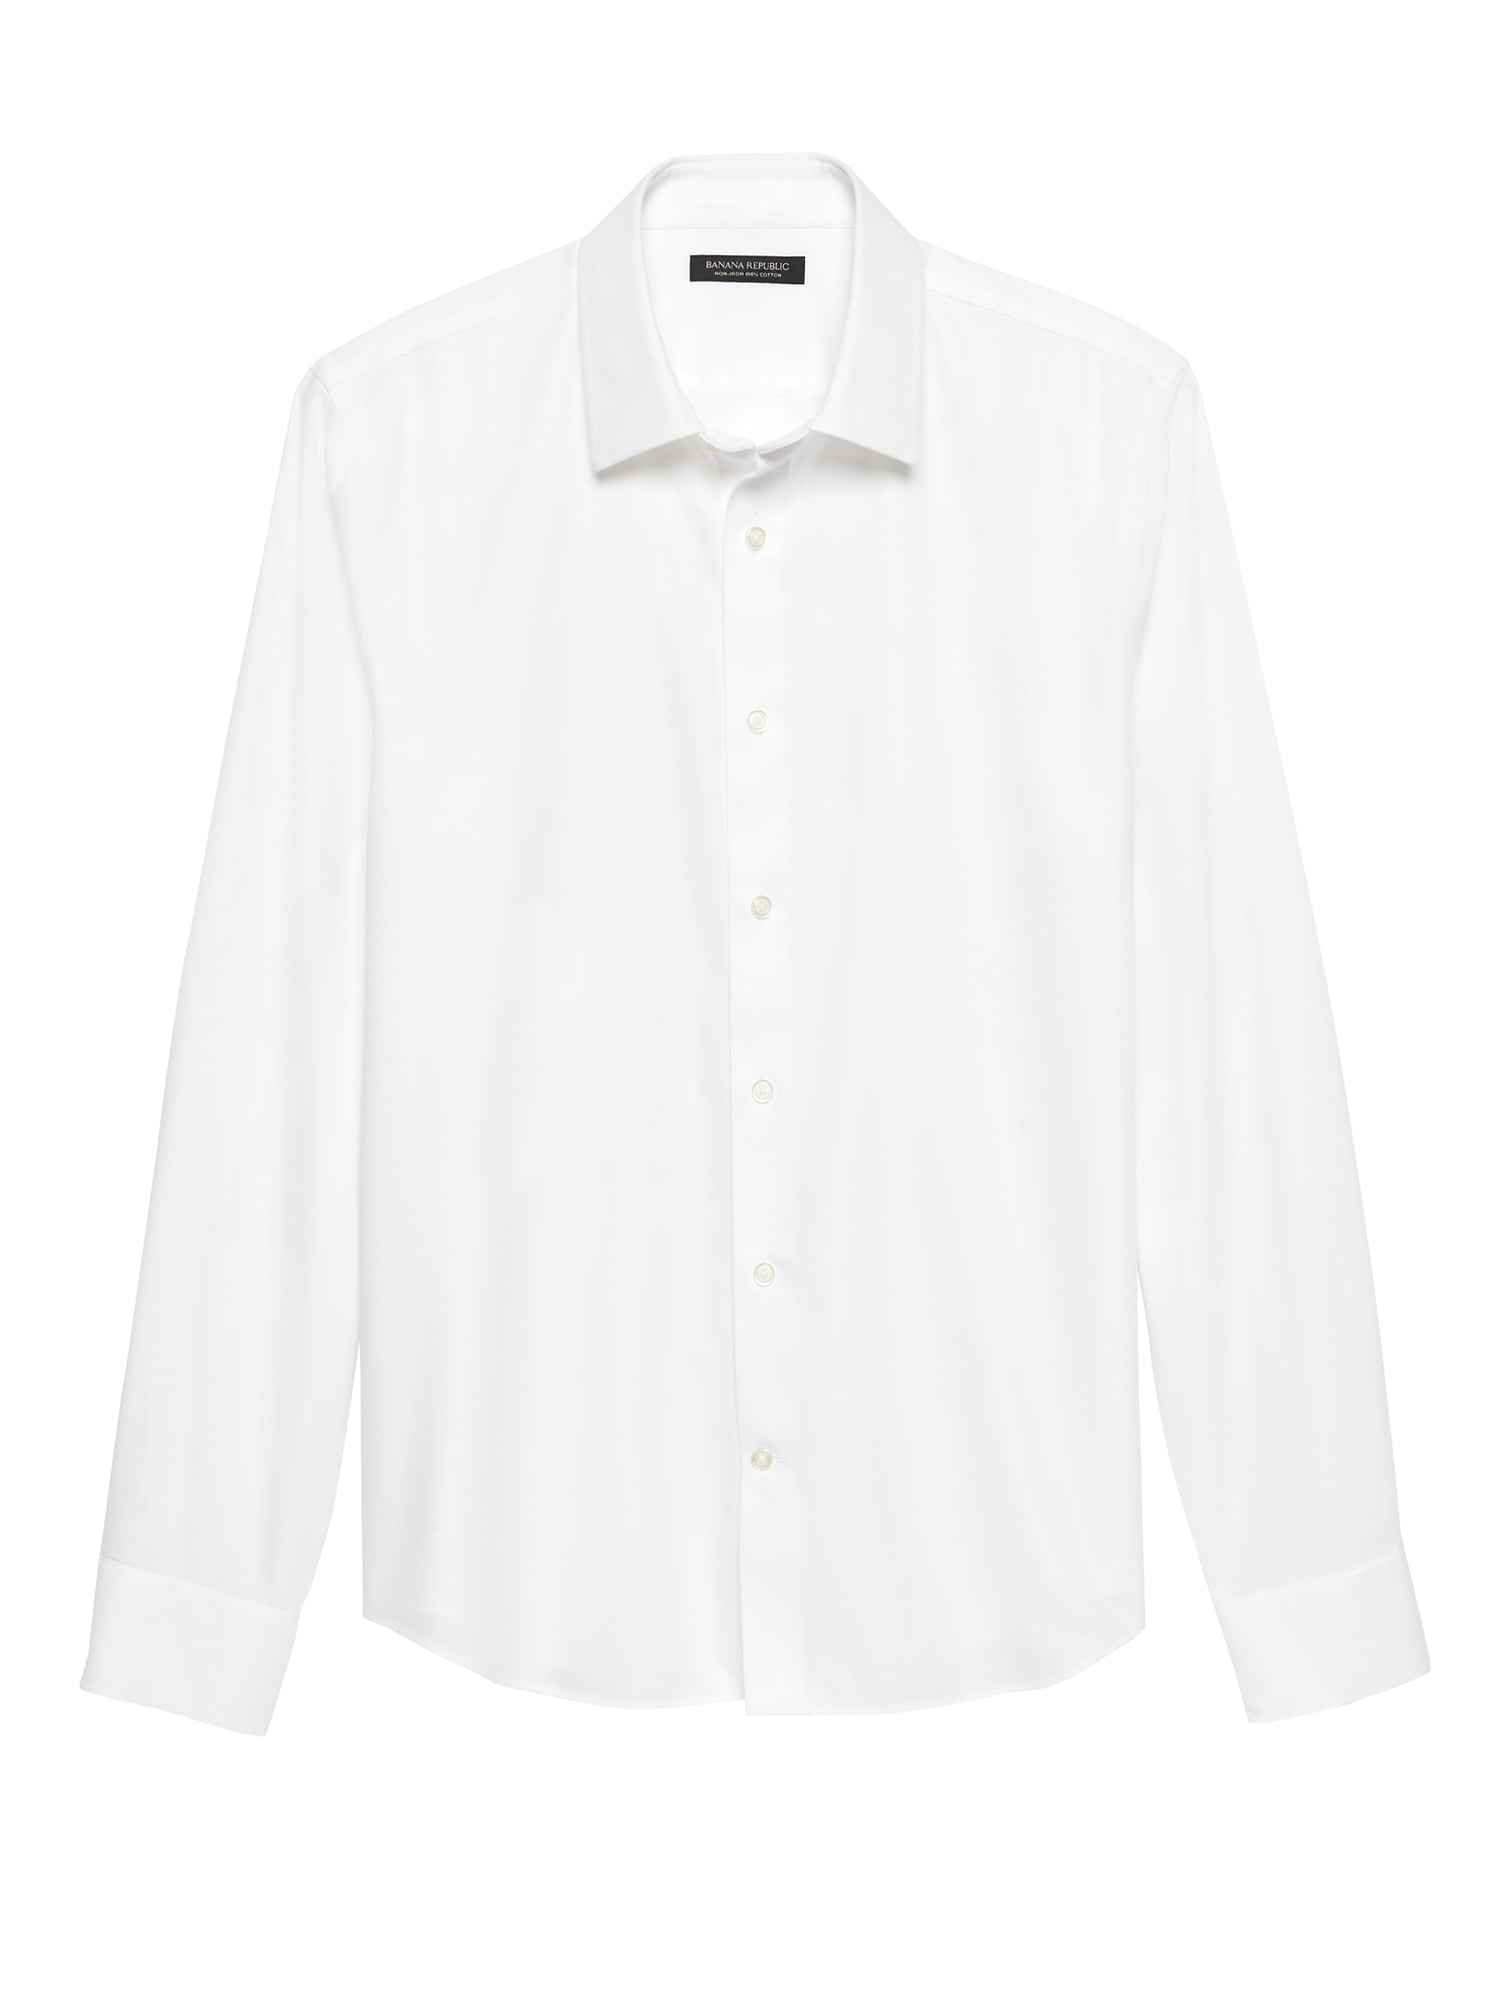 100 cotton white dress shirts